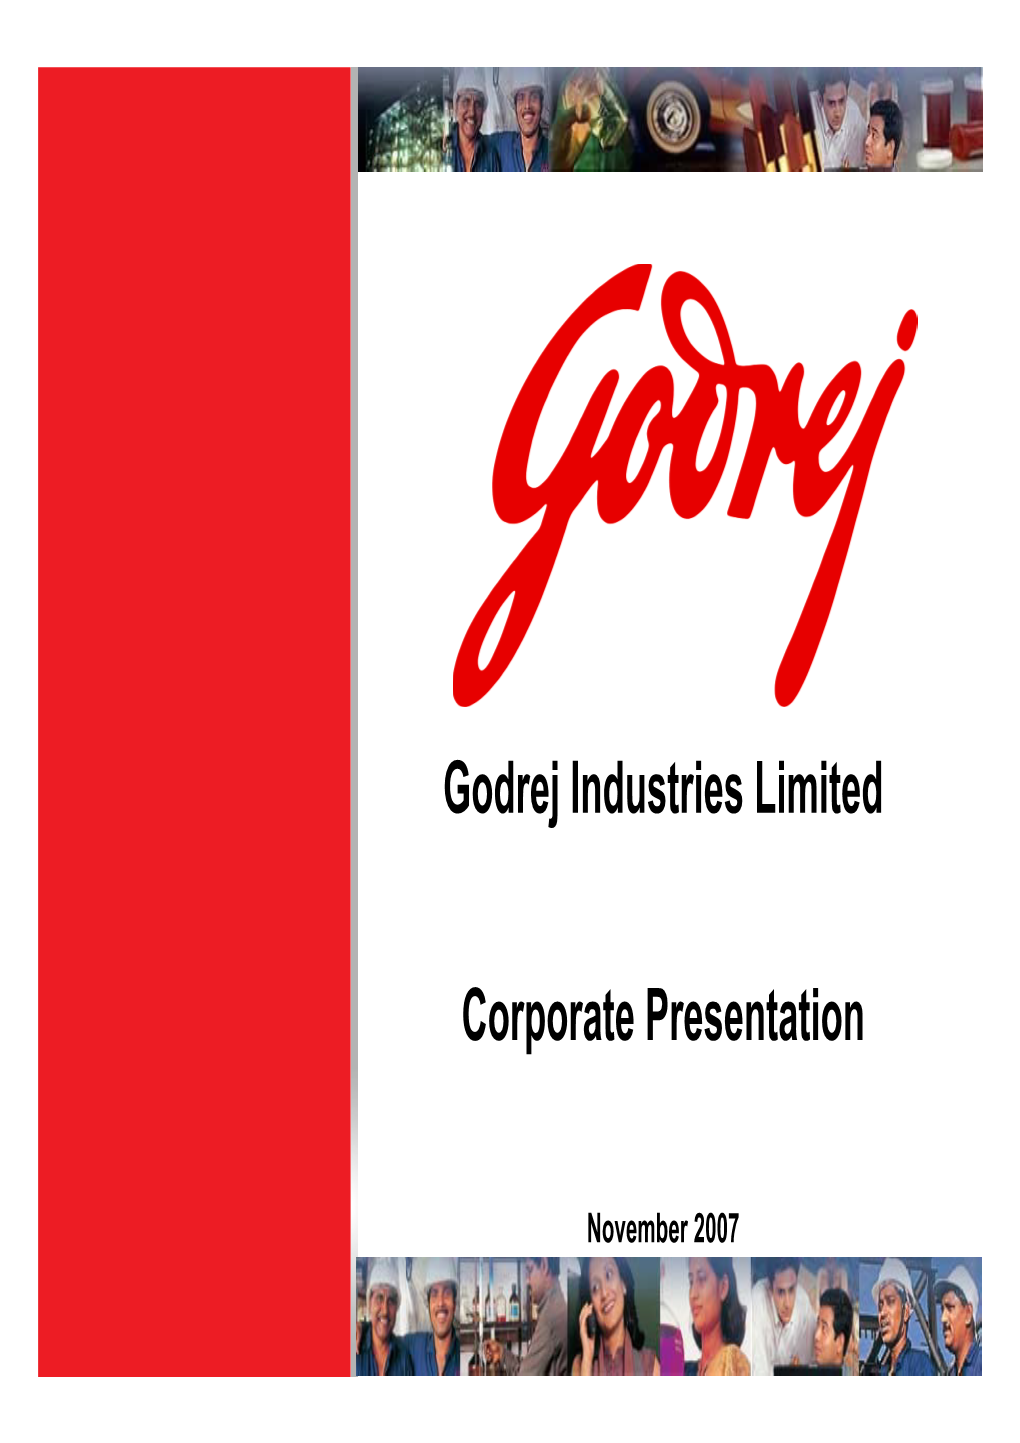 Godrej Industries Limited Corporate Presentation